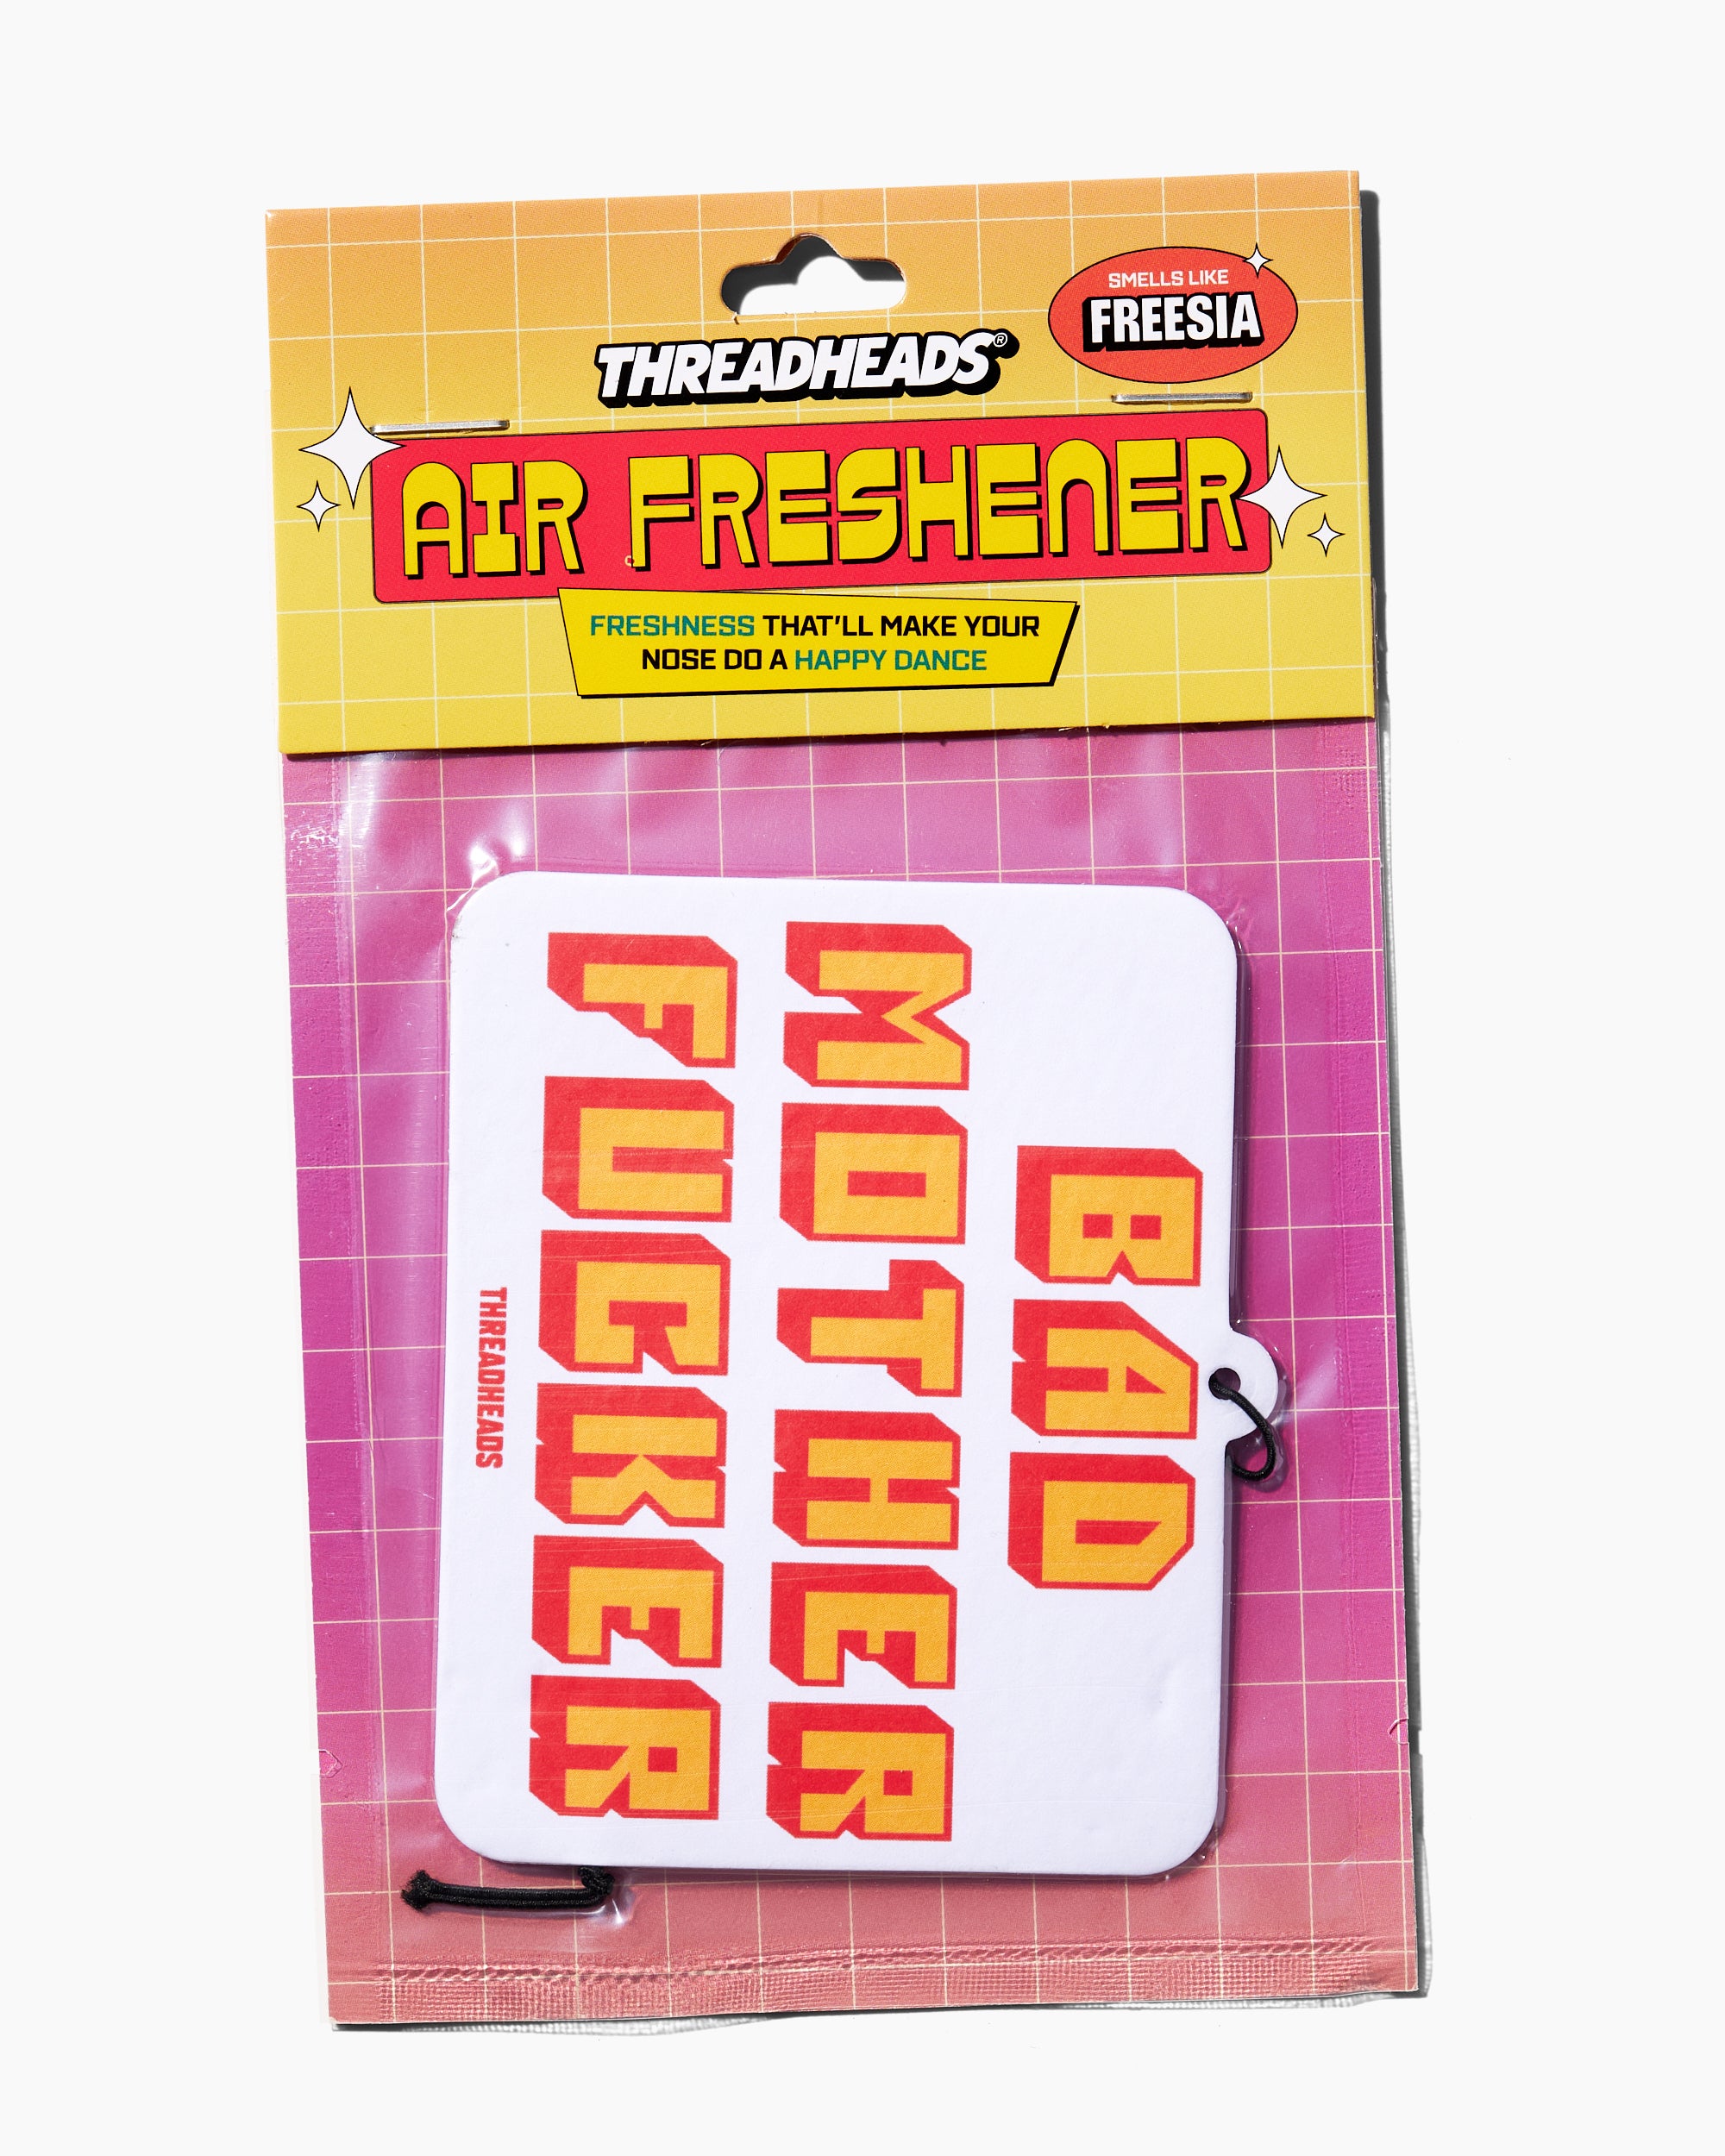 Bad Mother Fucker Air Freshener